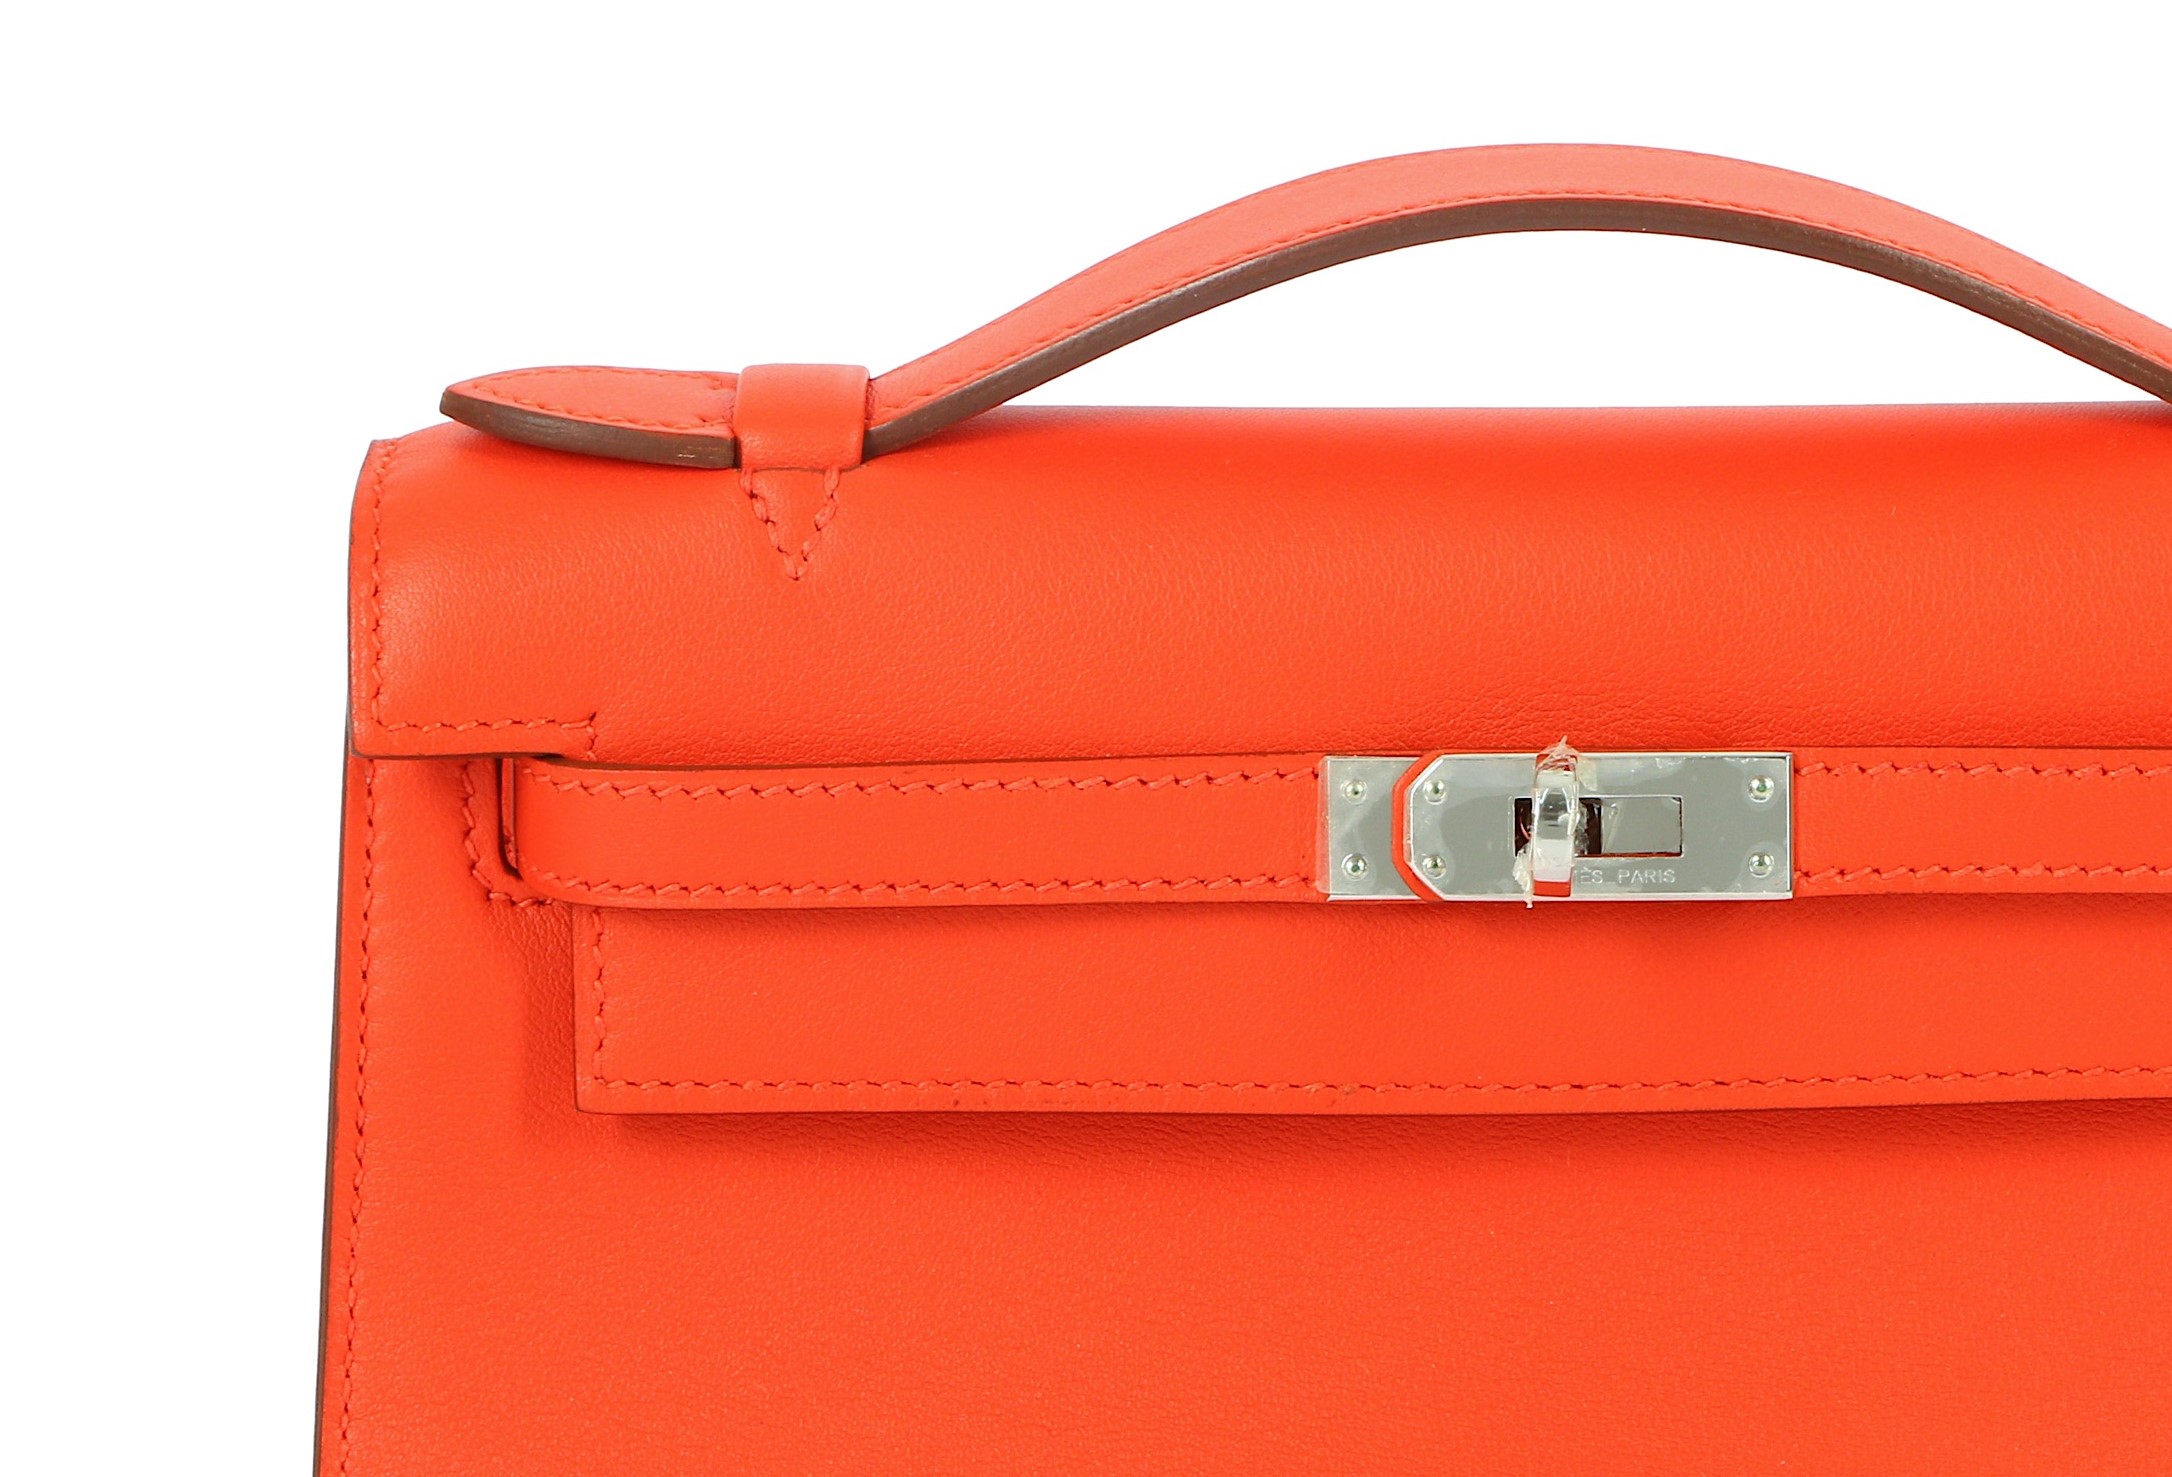 Designer Handbags & Fashion | Live Online